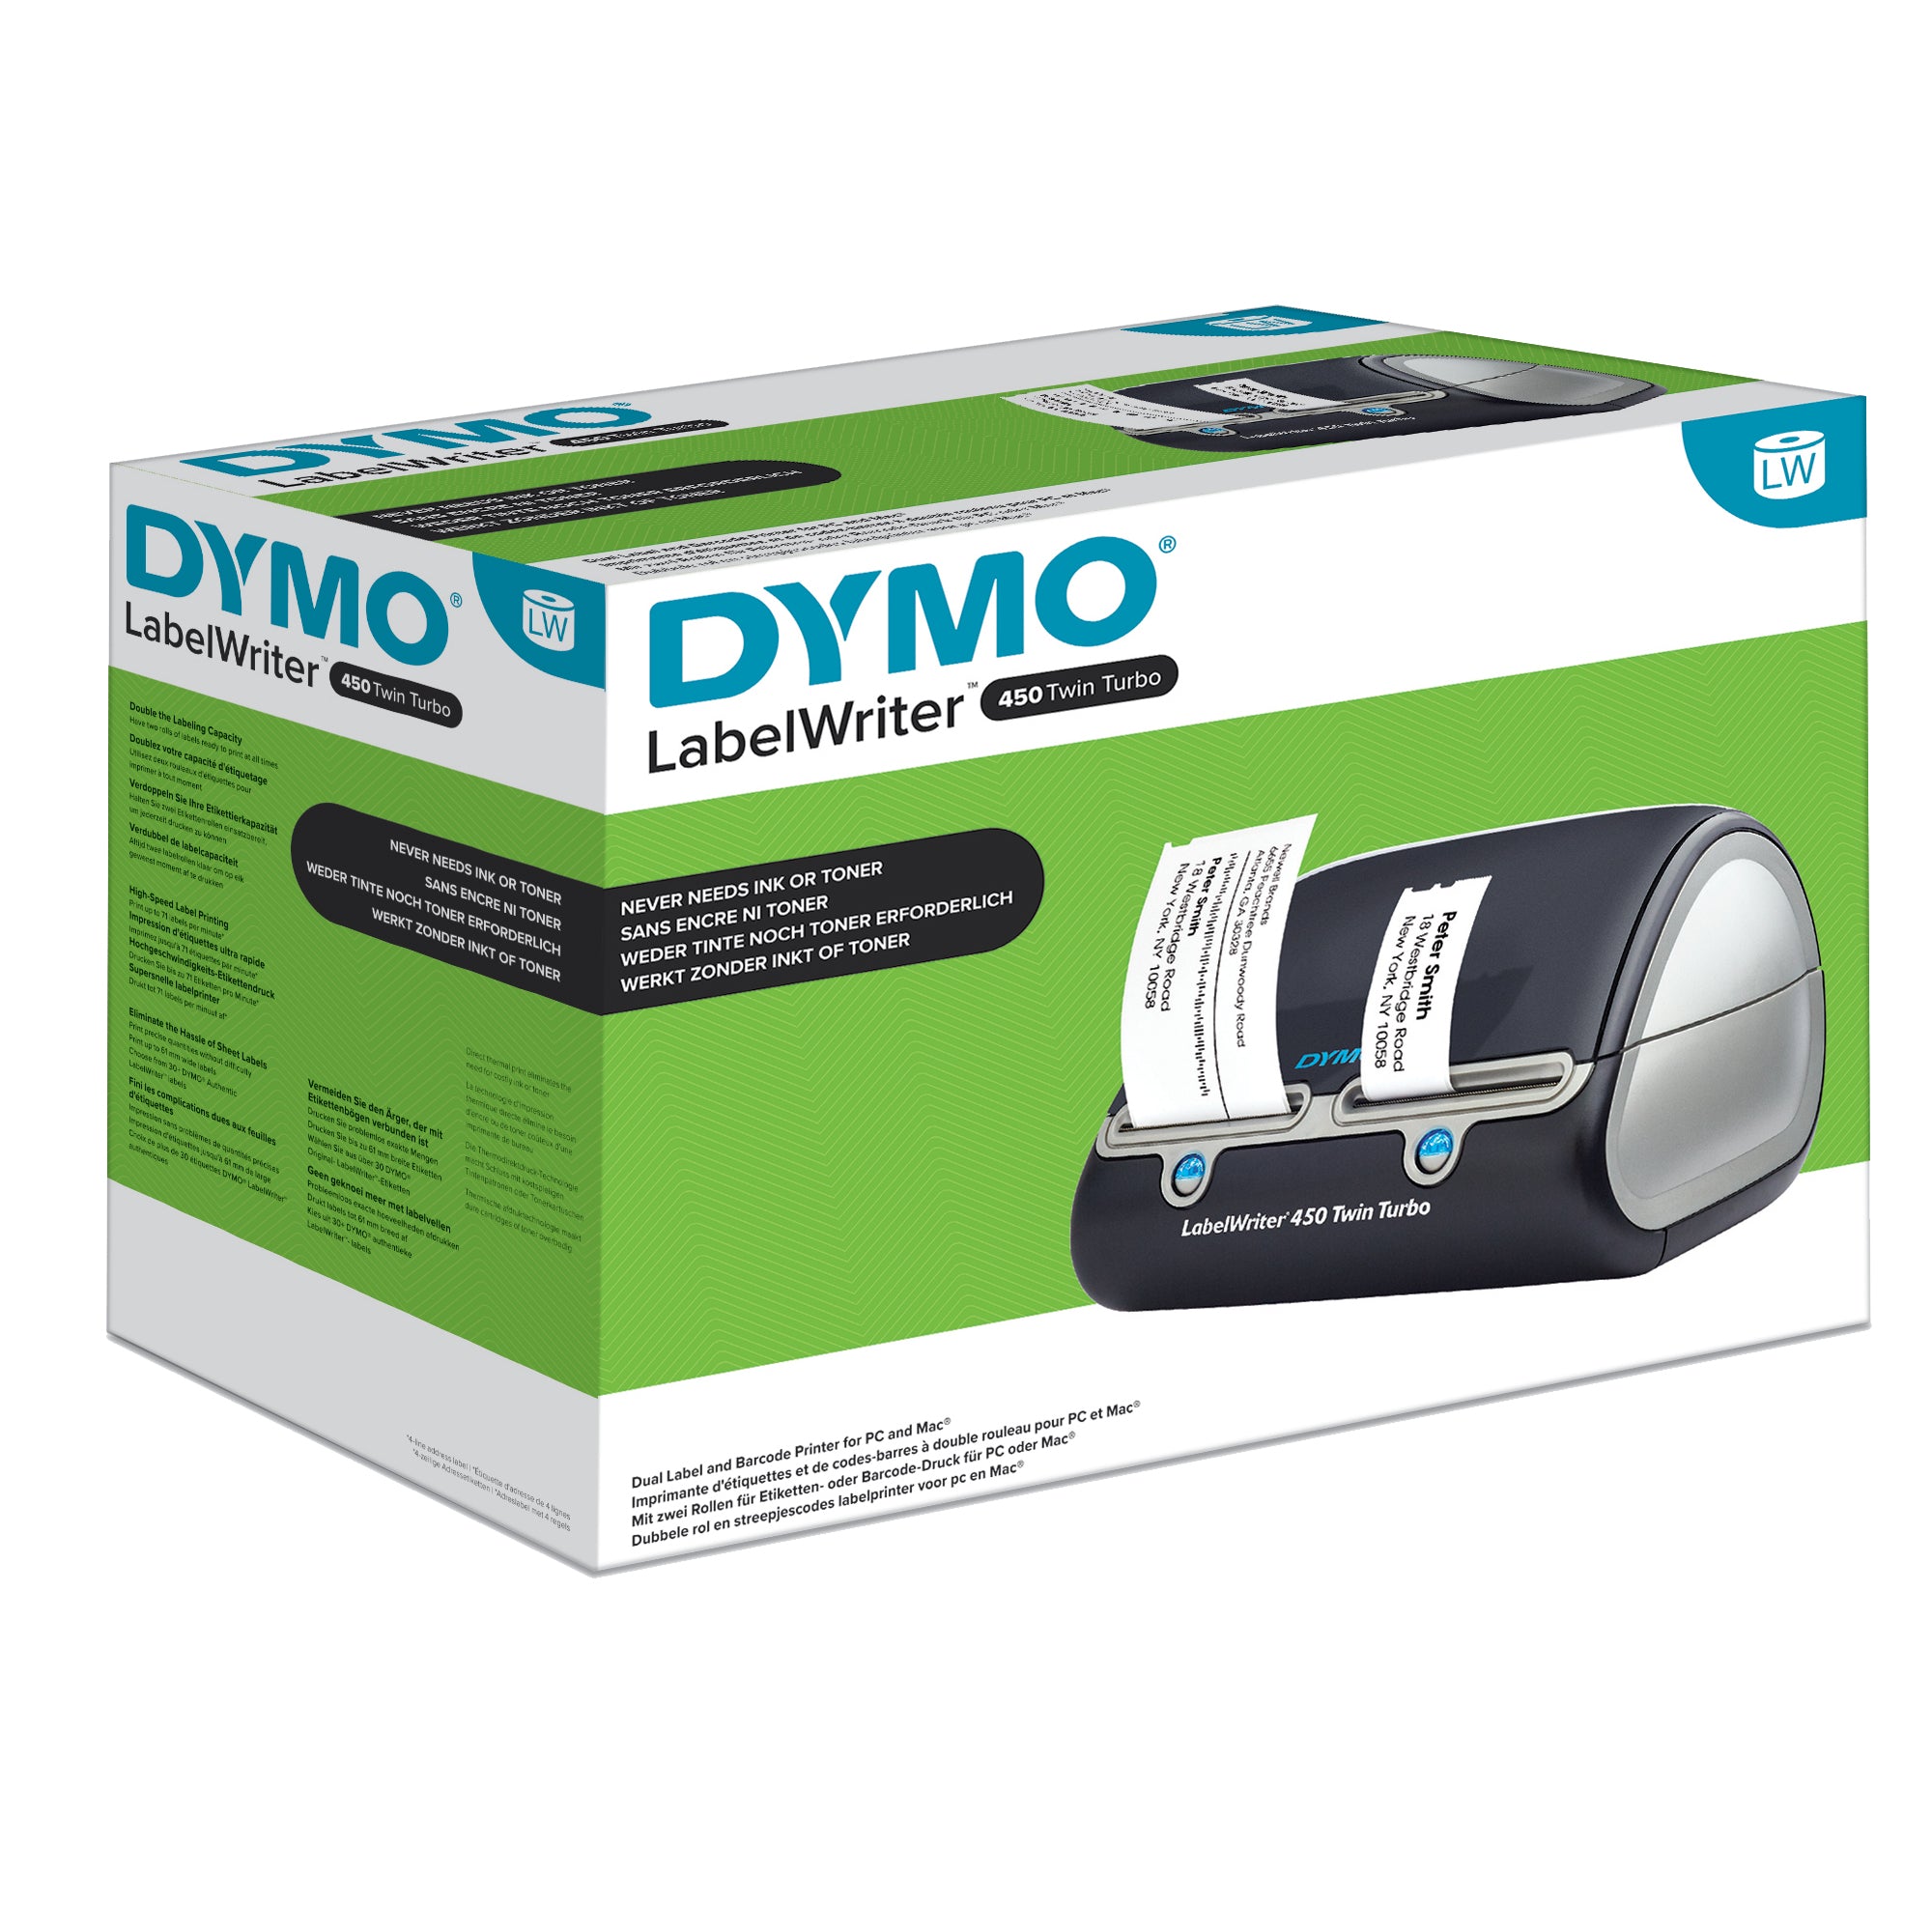 dymo-etichettatrice-labelwriter-450-twin-turbo